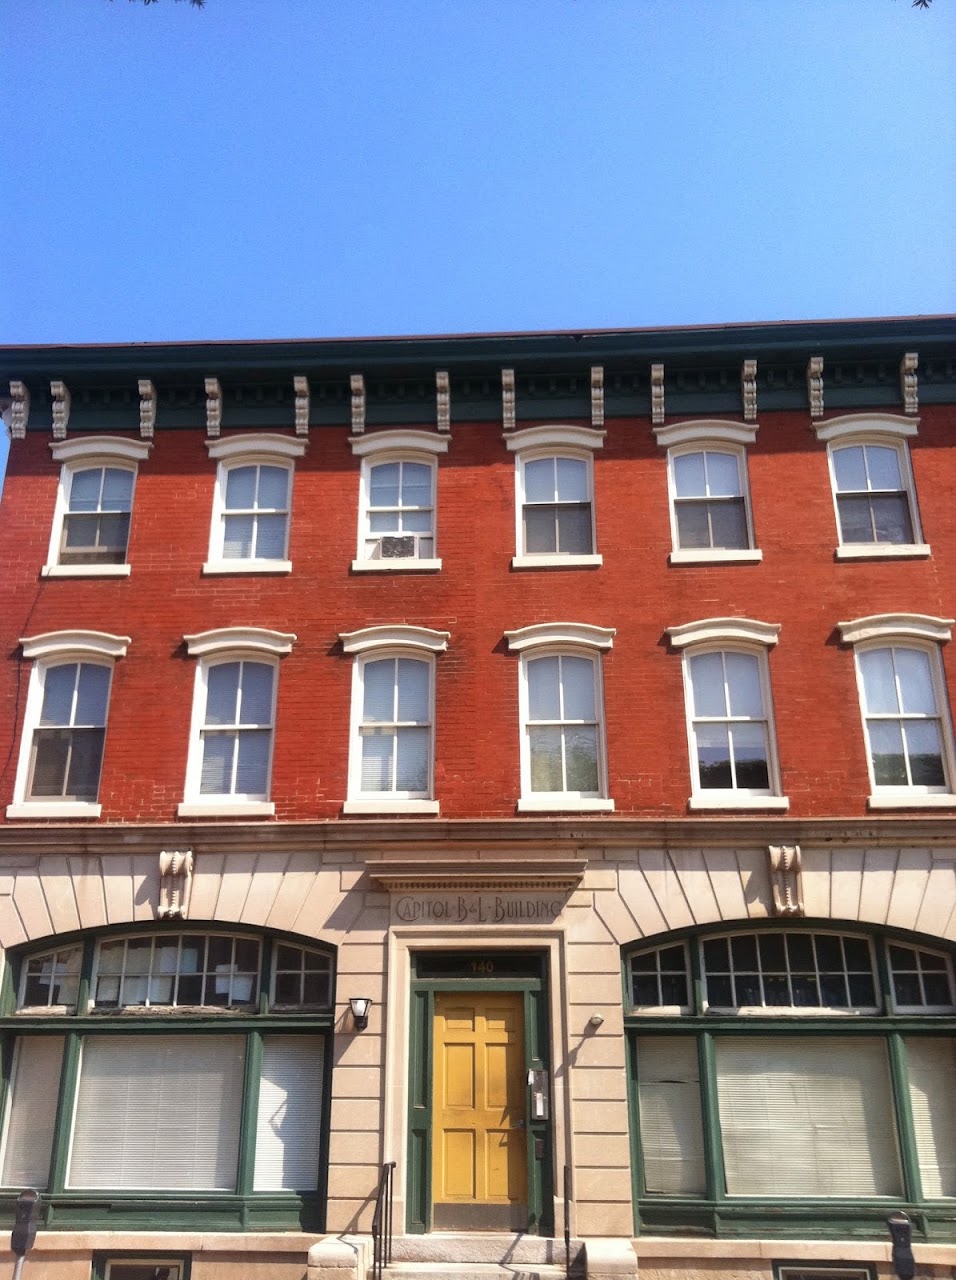 Photo of HANOVER STREET HOUSING at 148 WEST HANOVER STREET TRENTON CITY, NJ 08618